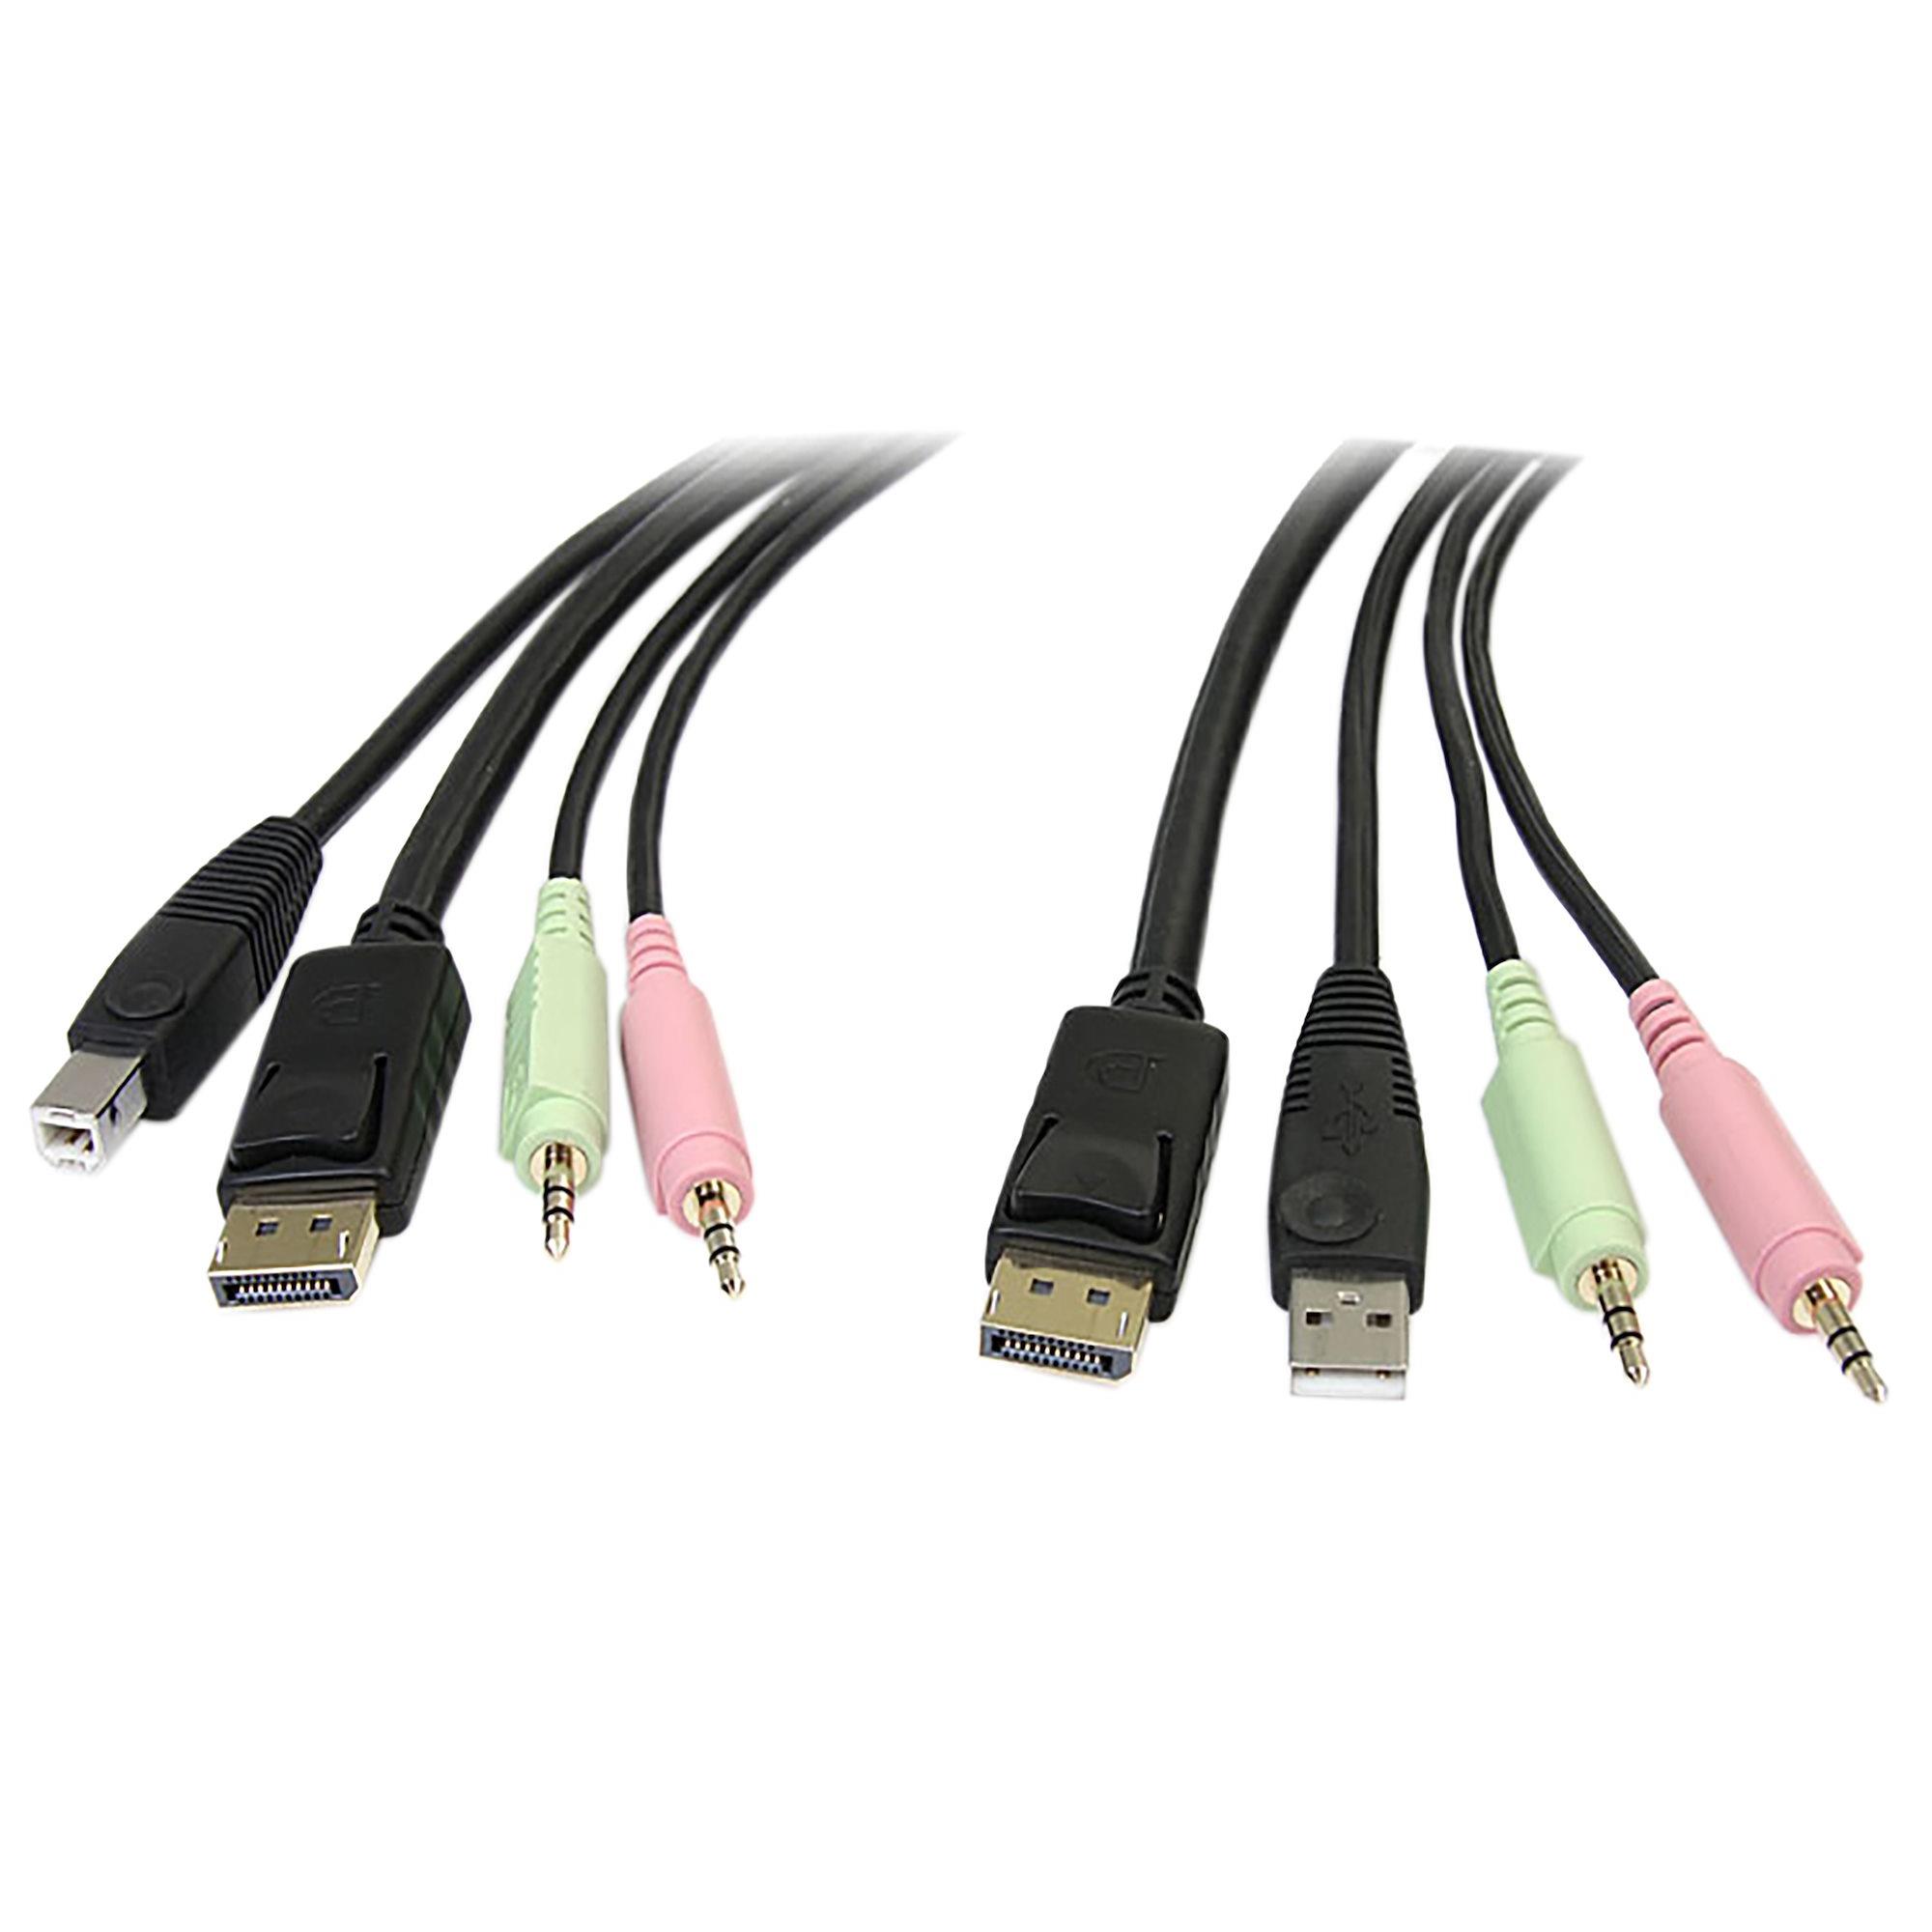 【DP4N1USB6】USB DISPLAYPORT KVM CABLE